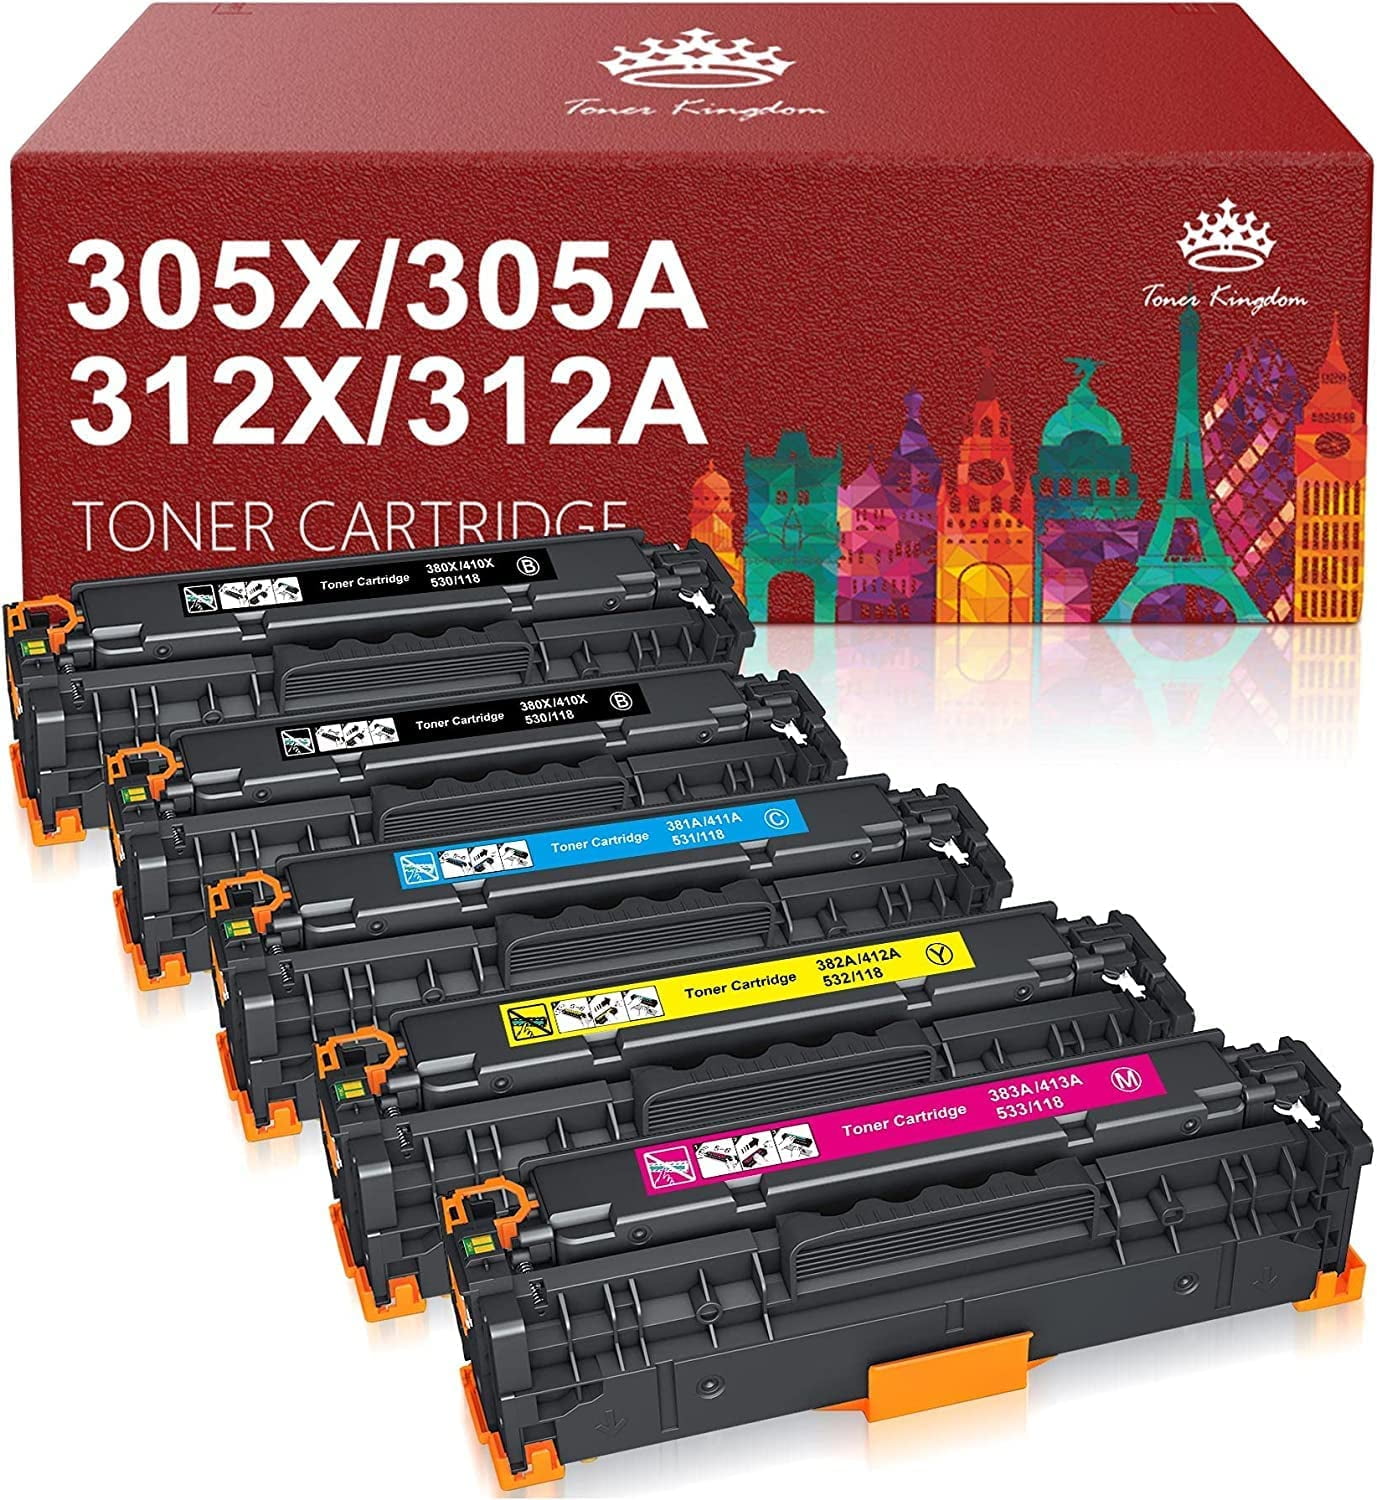 305X 305A 305 312 312A 312X 304A for HP Laserjet Pro 400 300 Color MFP M451dn M451nw M475dn M476nw M476dw M351A M375nw Printer (5 Pack) -